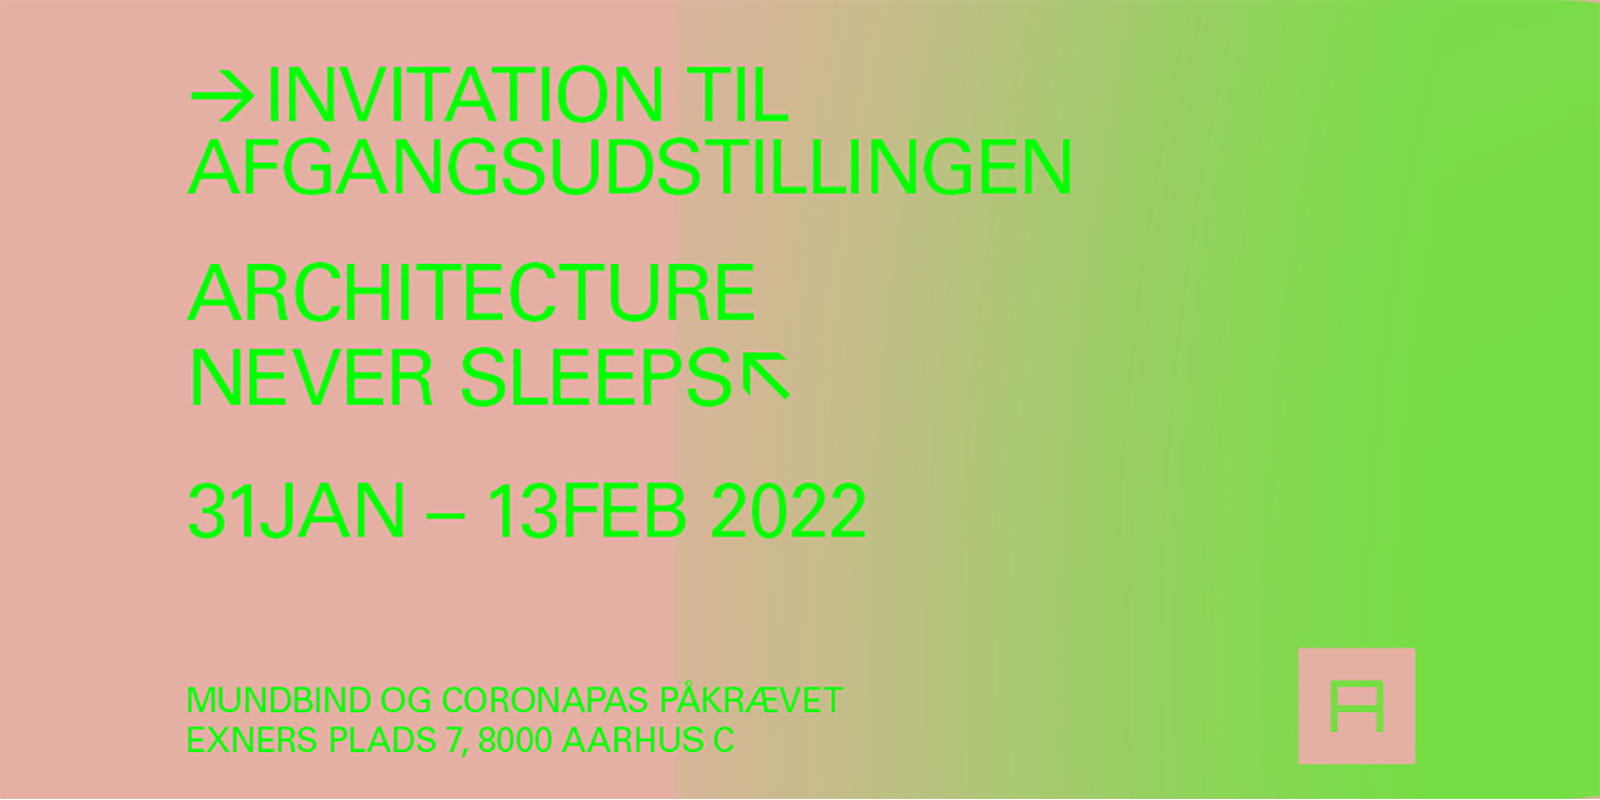 ARCHITECTURE NEVER SLEEPS INVITATION-kopi-2